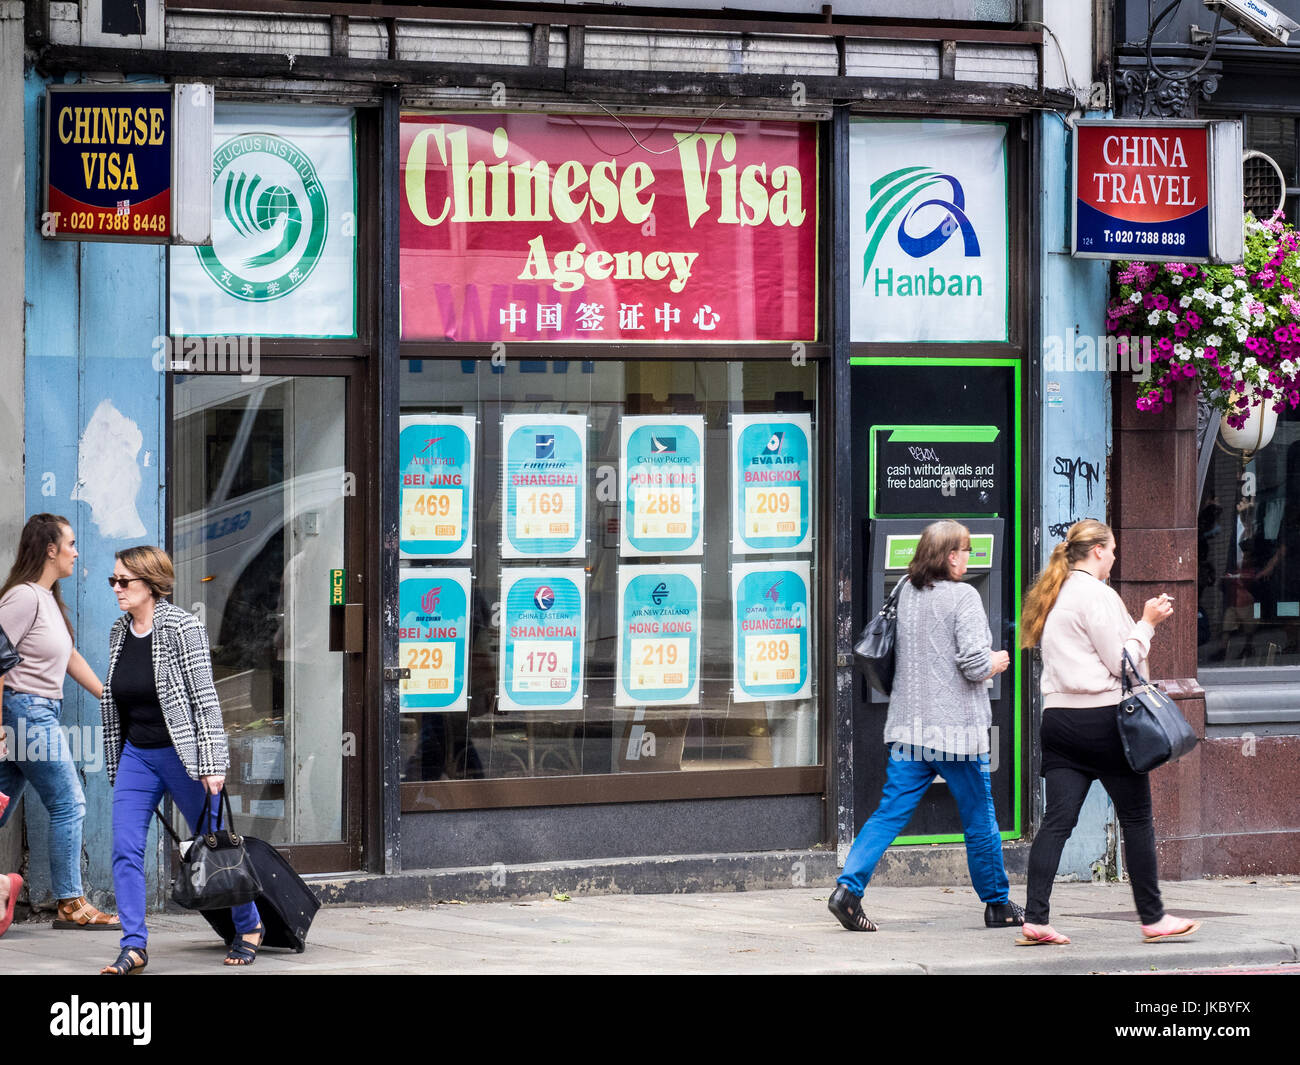 Chinesisches Visum Agentur Store in Euston Road, London UK Stockfoto